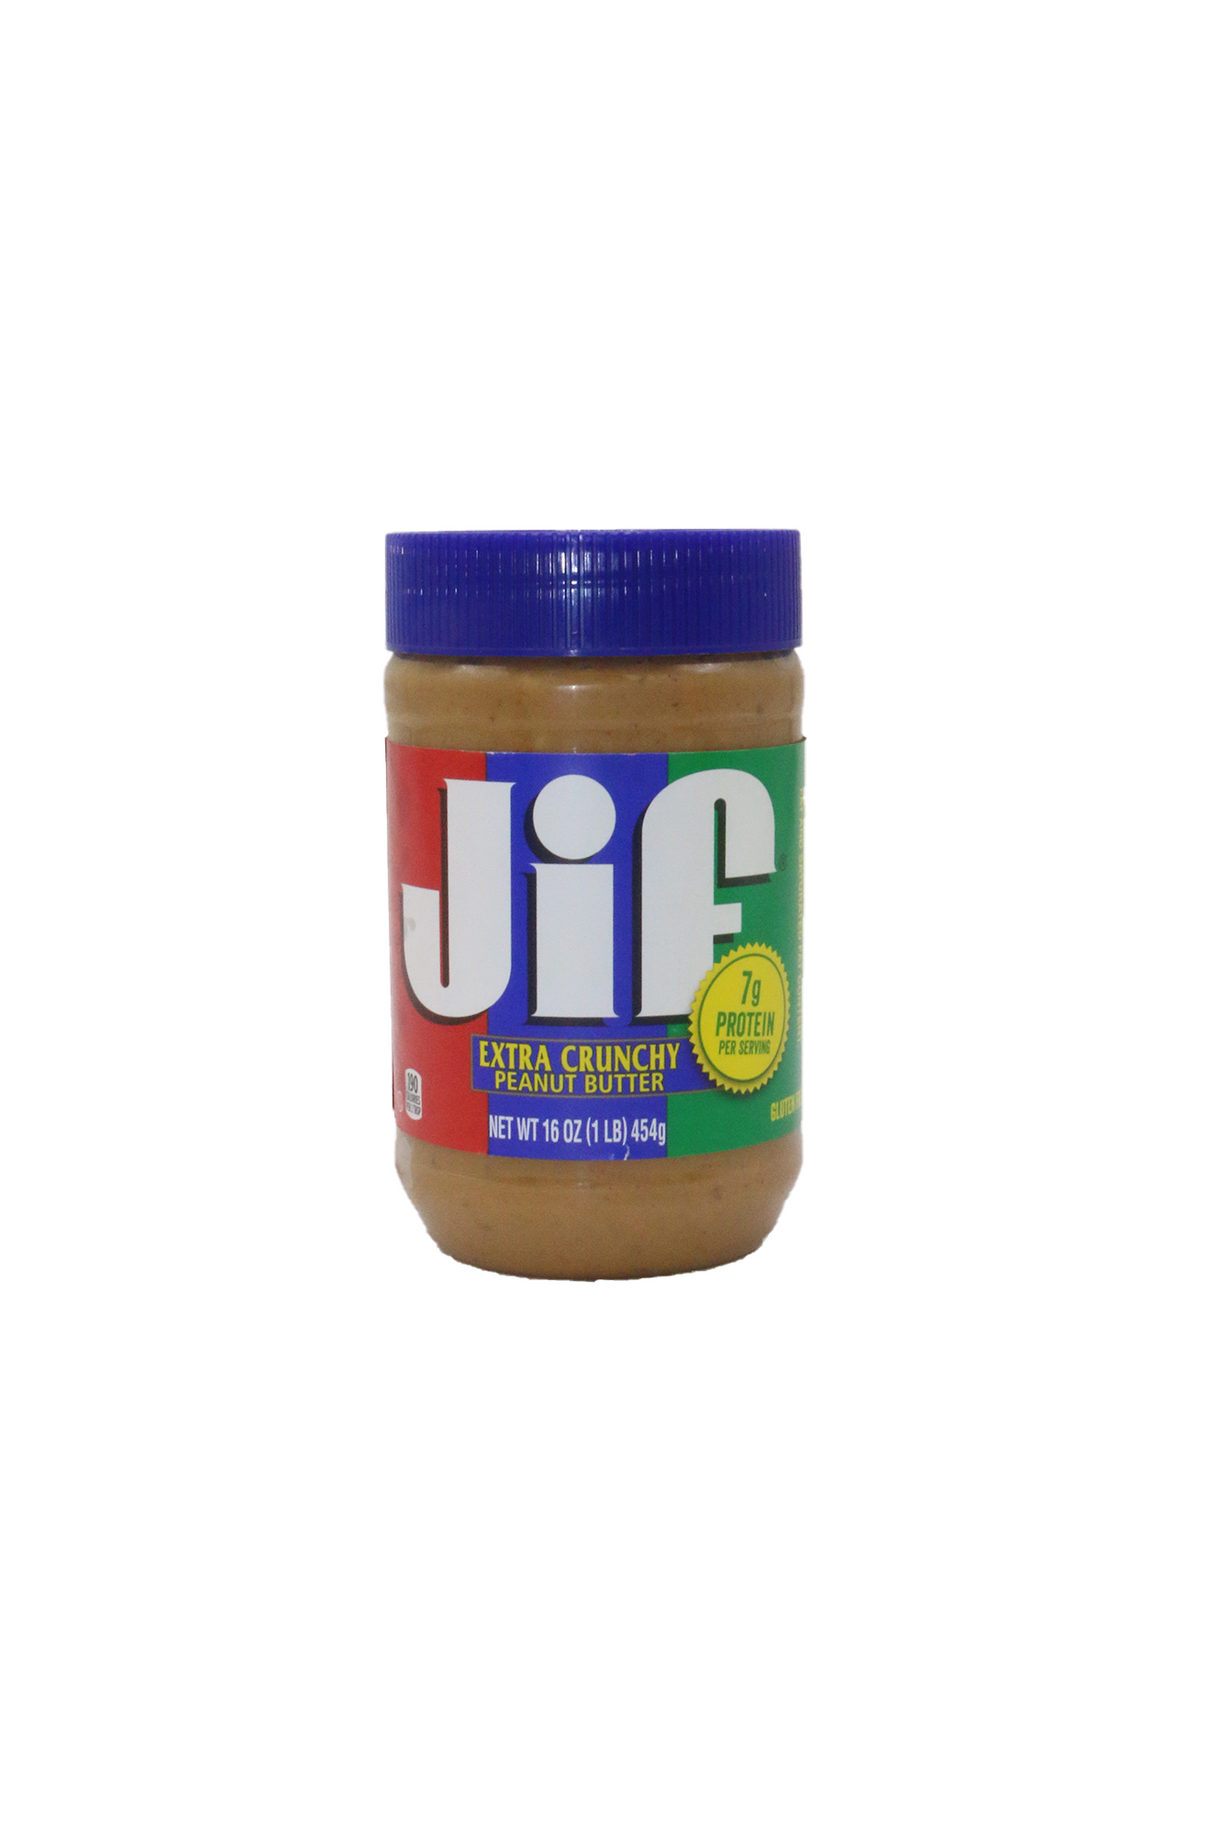 jif peanut butter extra crunchy 454g